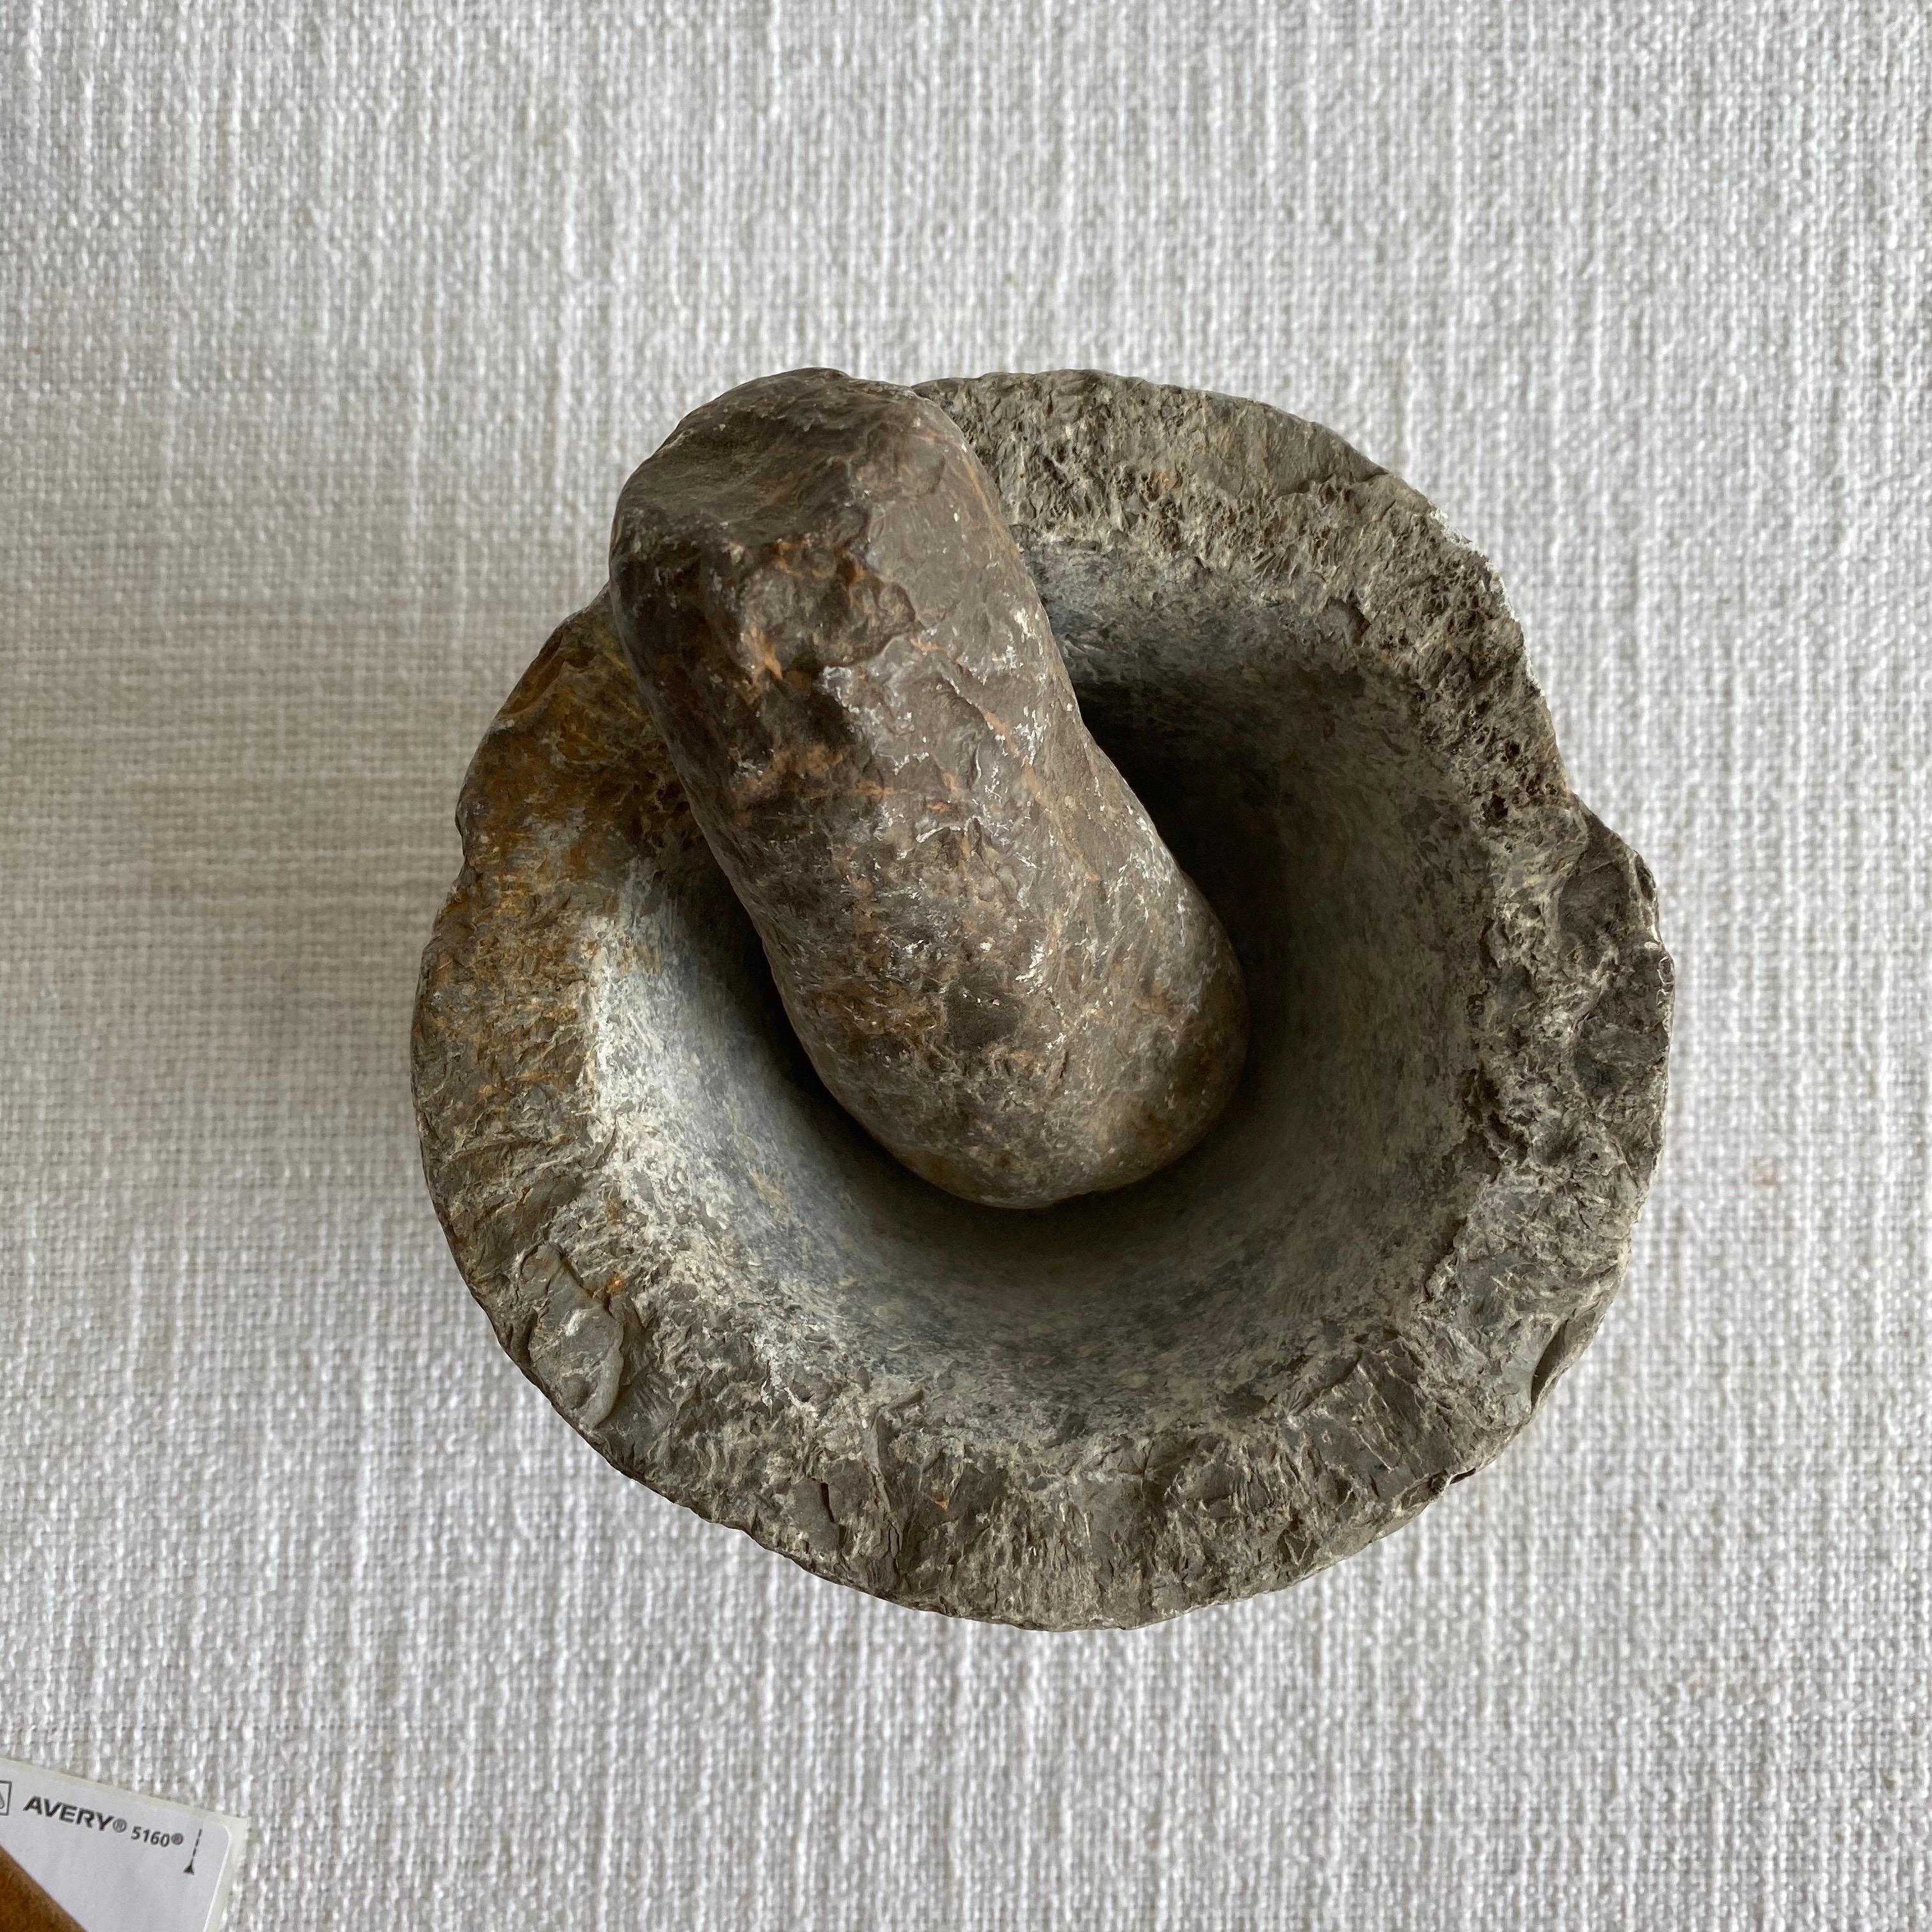 Antique stone mortar and pestle bowl set
Size: 6.5